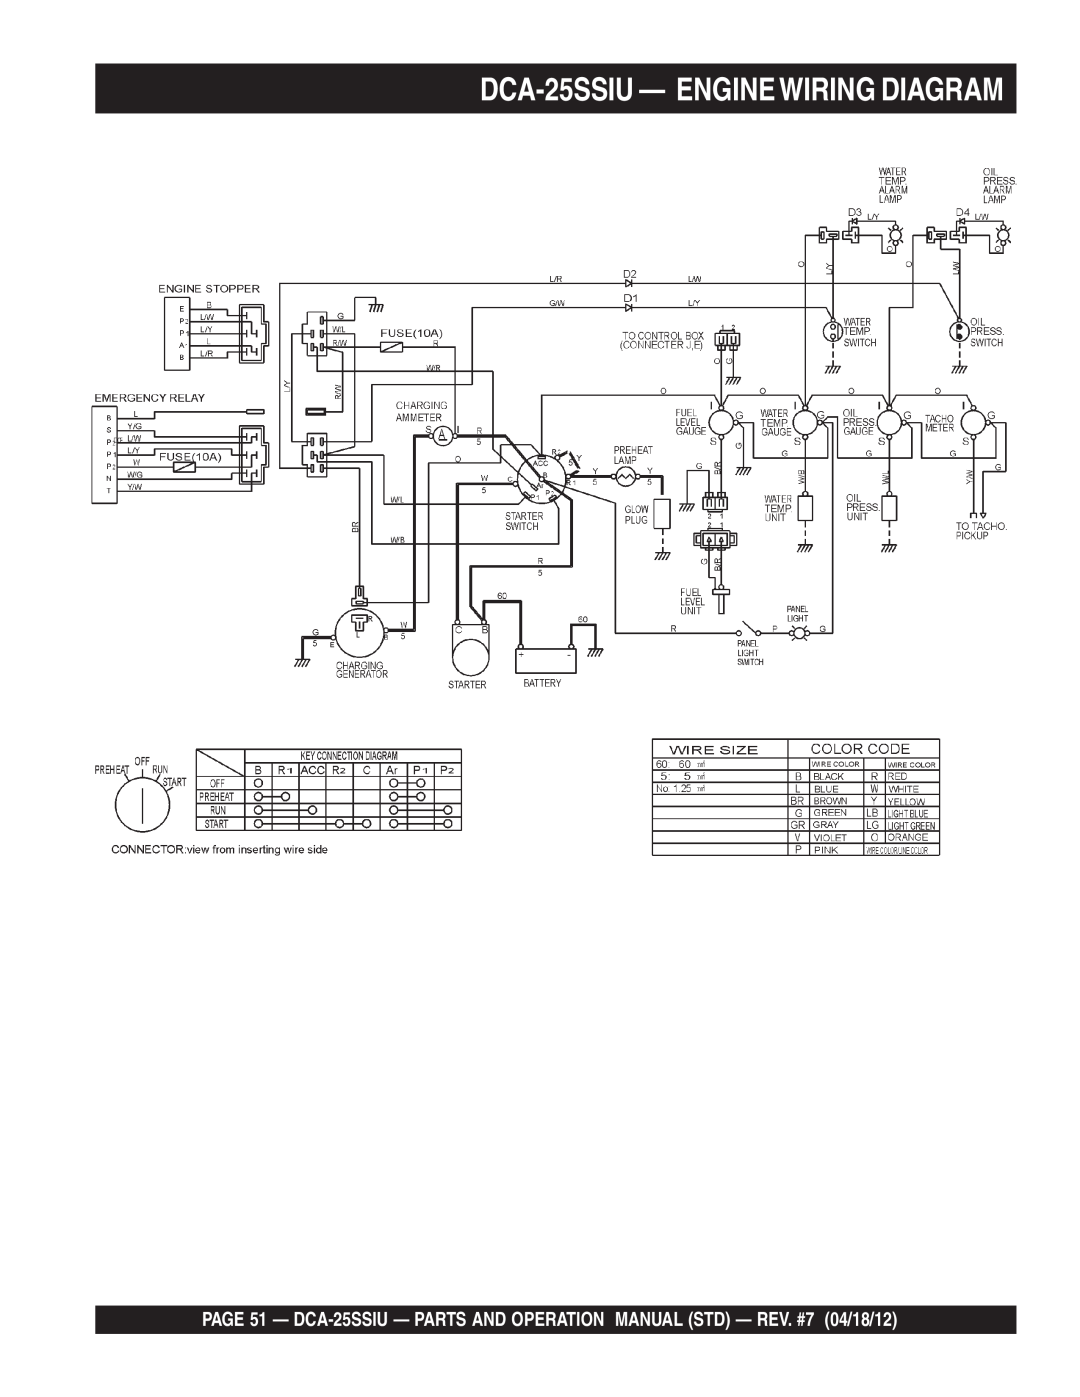 Multiquip DCA25SSIU manual DCA-25SSIU— ENGINEWIRING DIAGRAM 